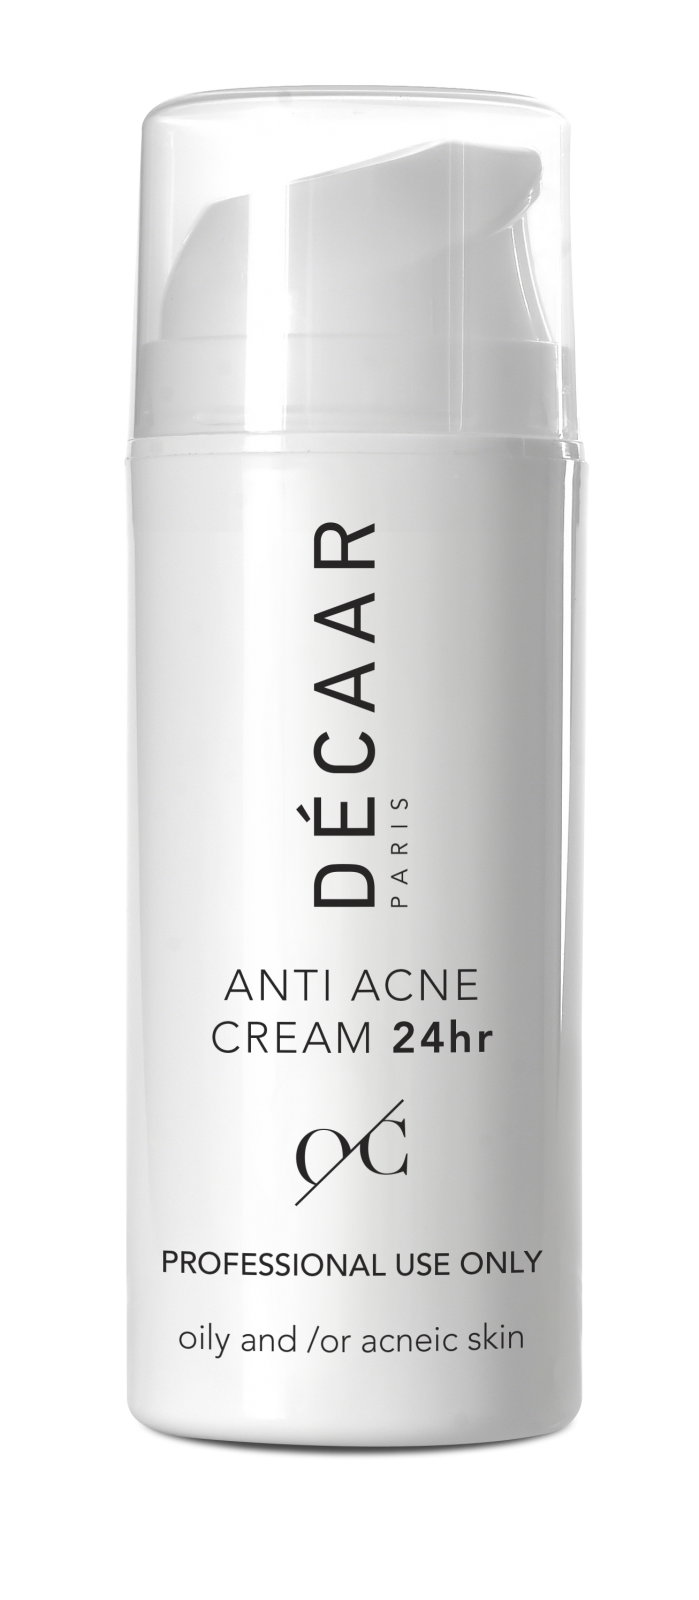 Anti-Acne-Cream-24hr-2-699x1600.png